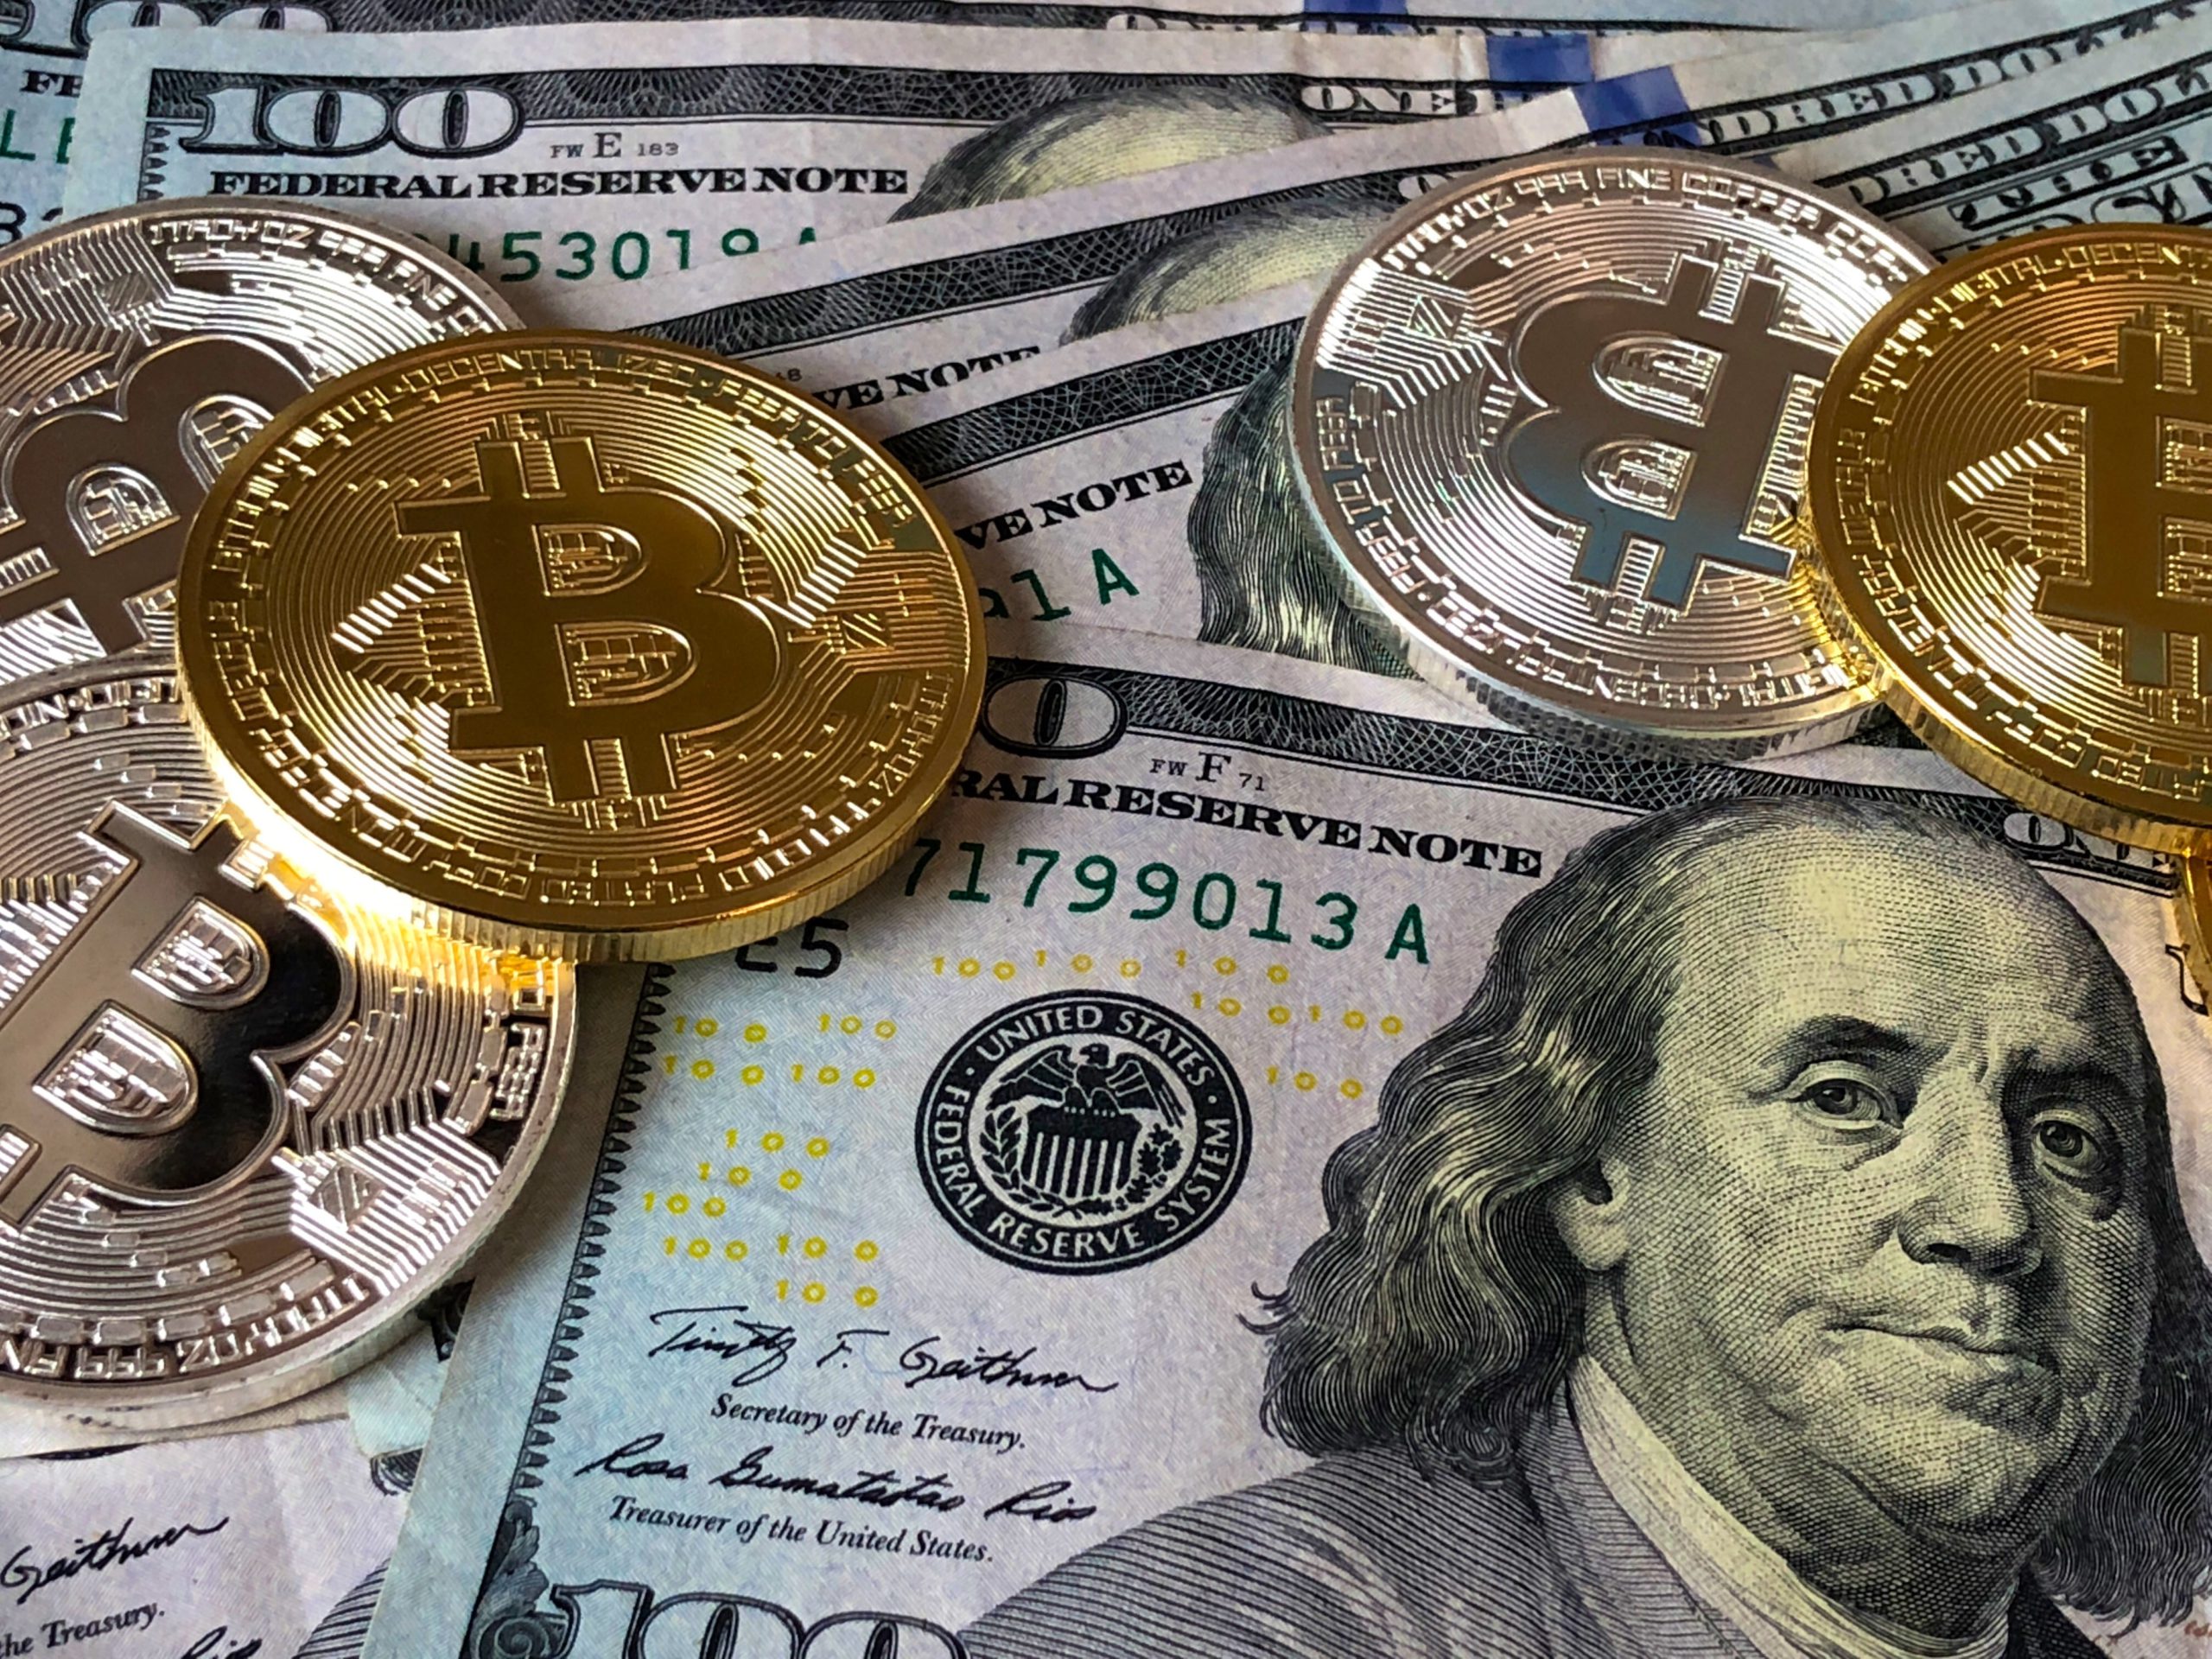 bitcoins on top of dollar bills